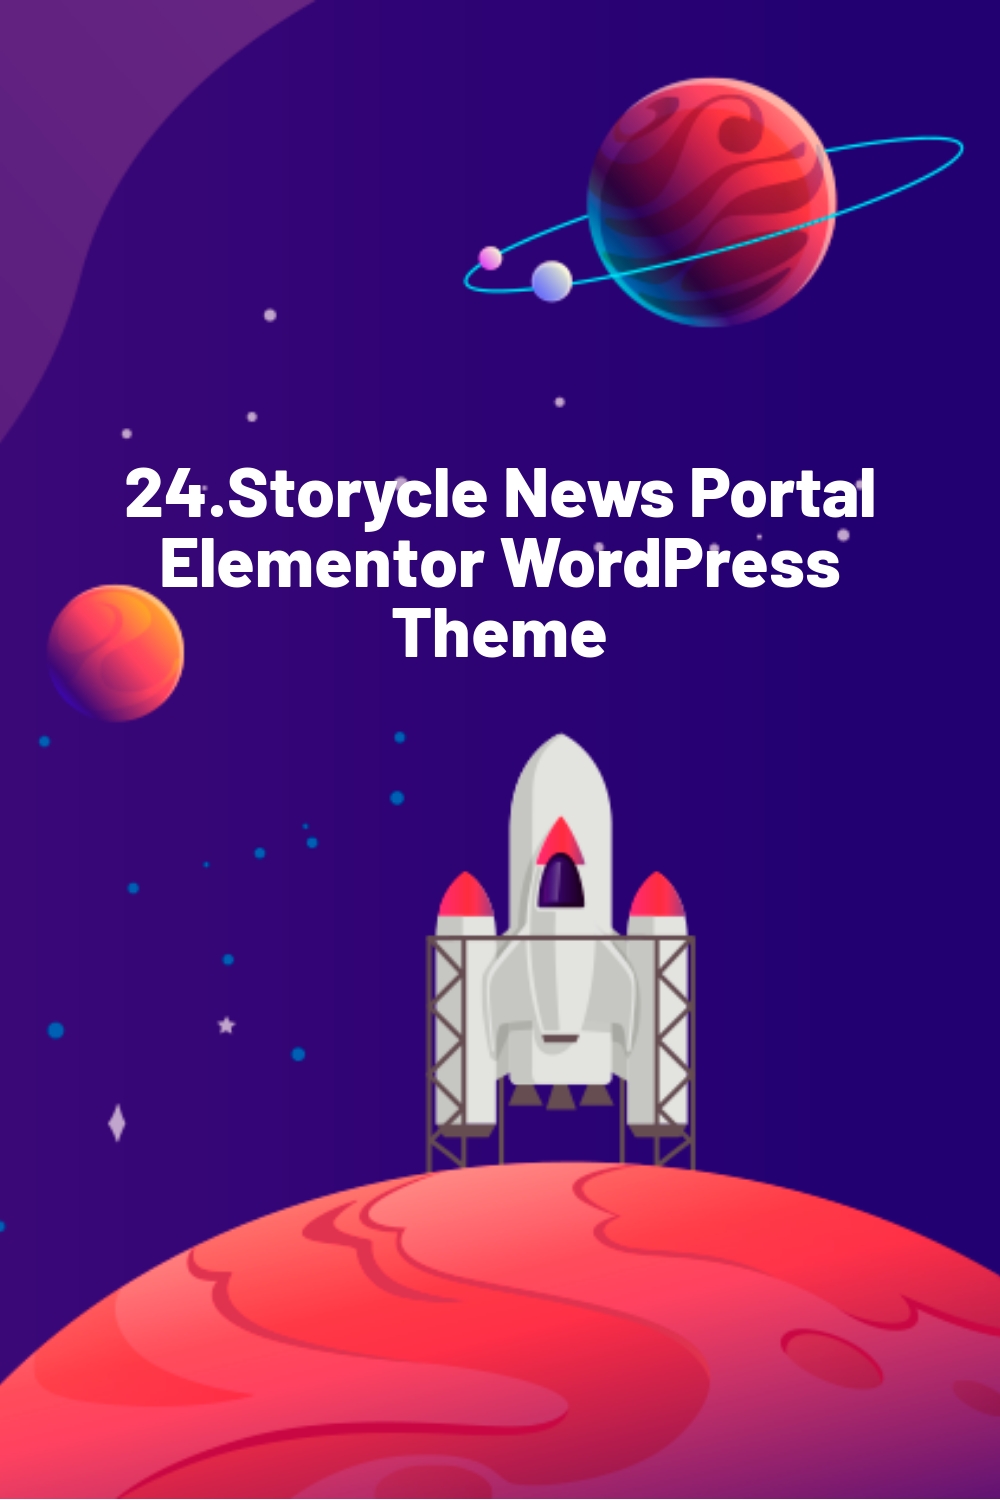 24.Storycle News Portal Elementor WordPress Theme